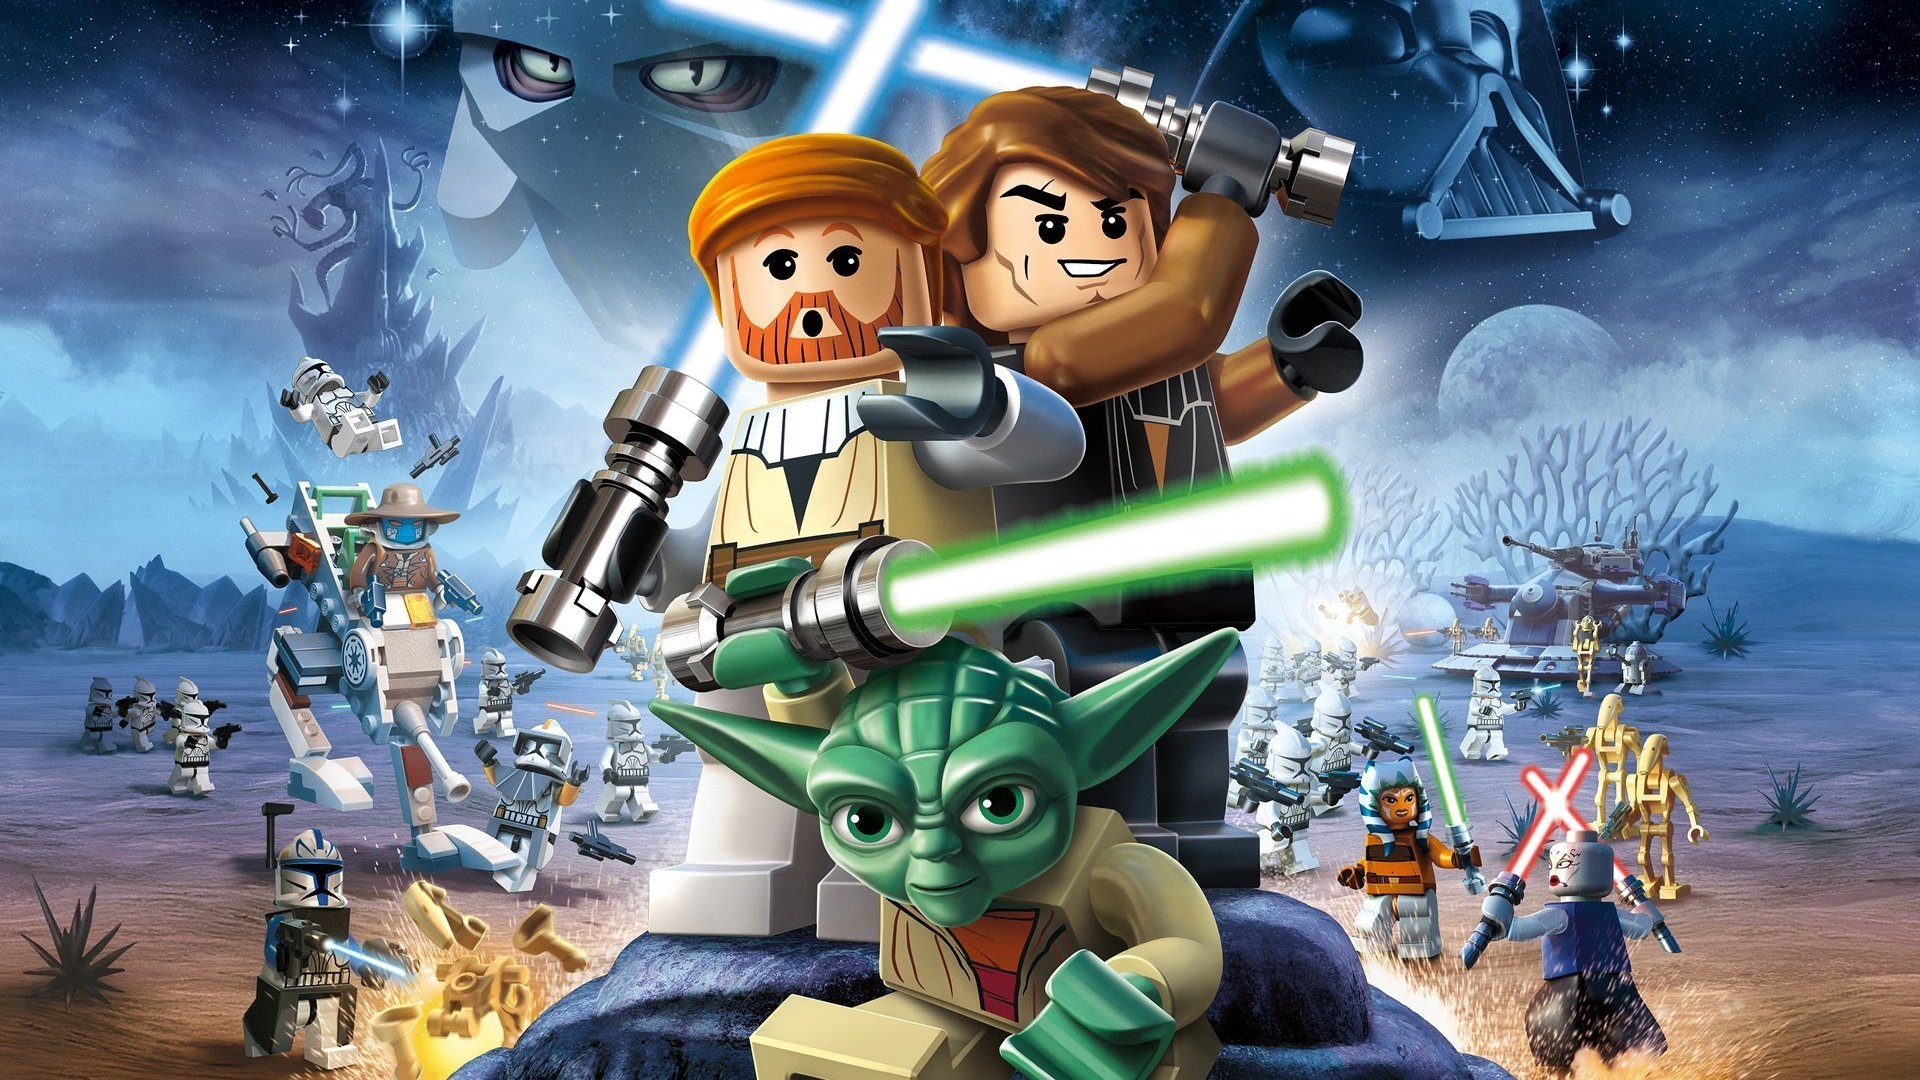 Lego Star Wars for 1920 x 1080 HDTV 1080p resolution